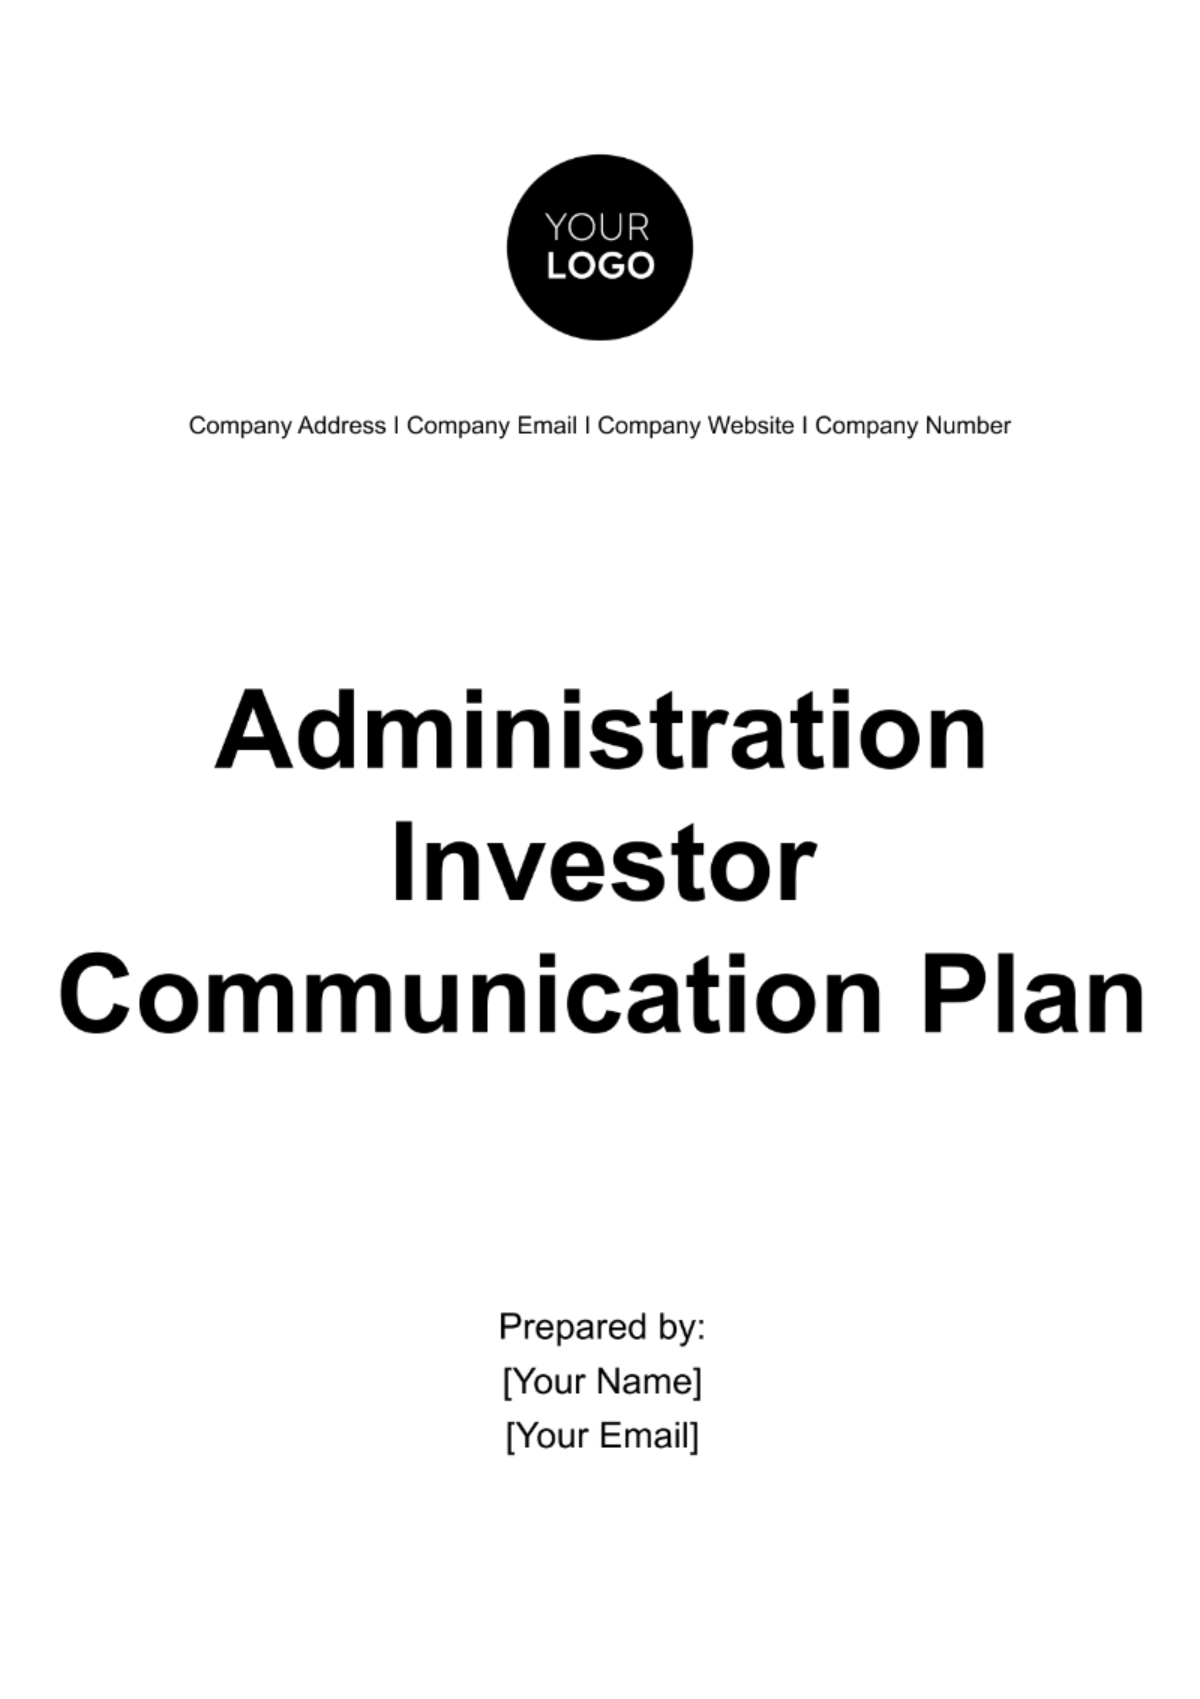 Administration Investor Communication Plan Template